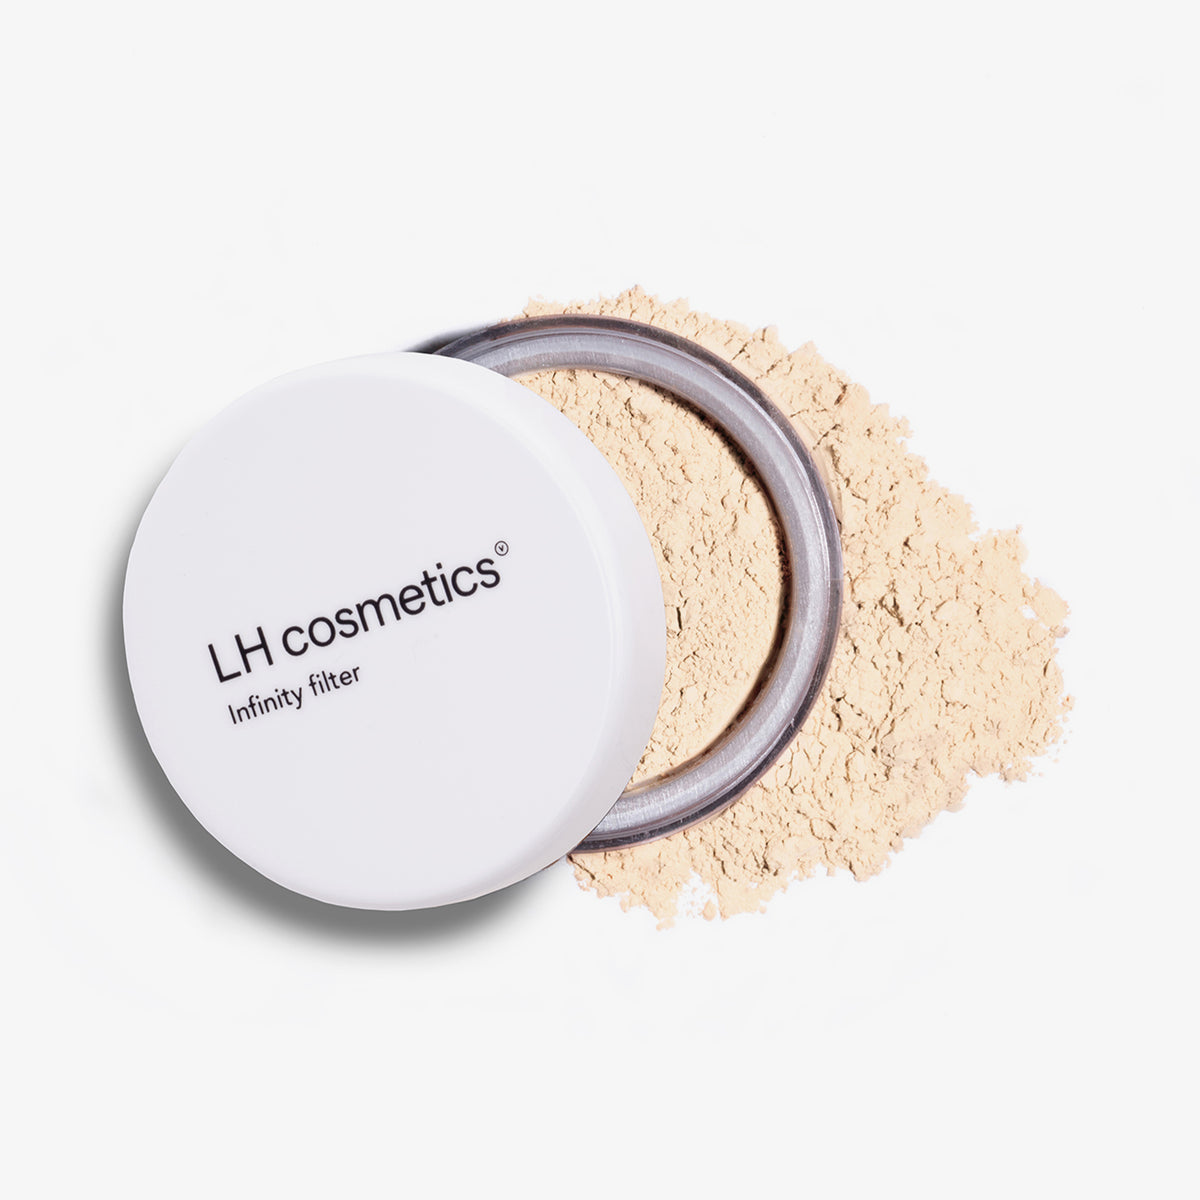 LH Cosmetics | Infinity Filter Light